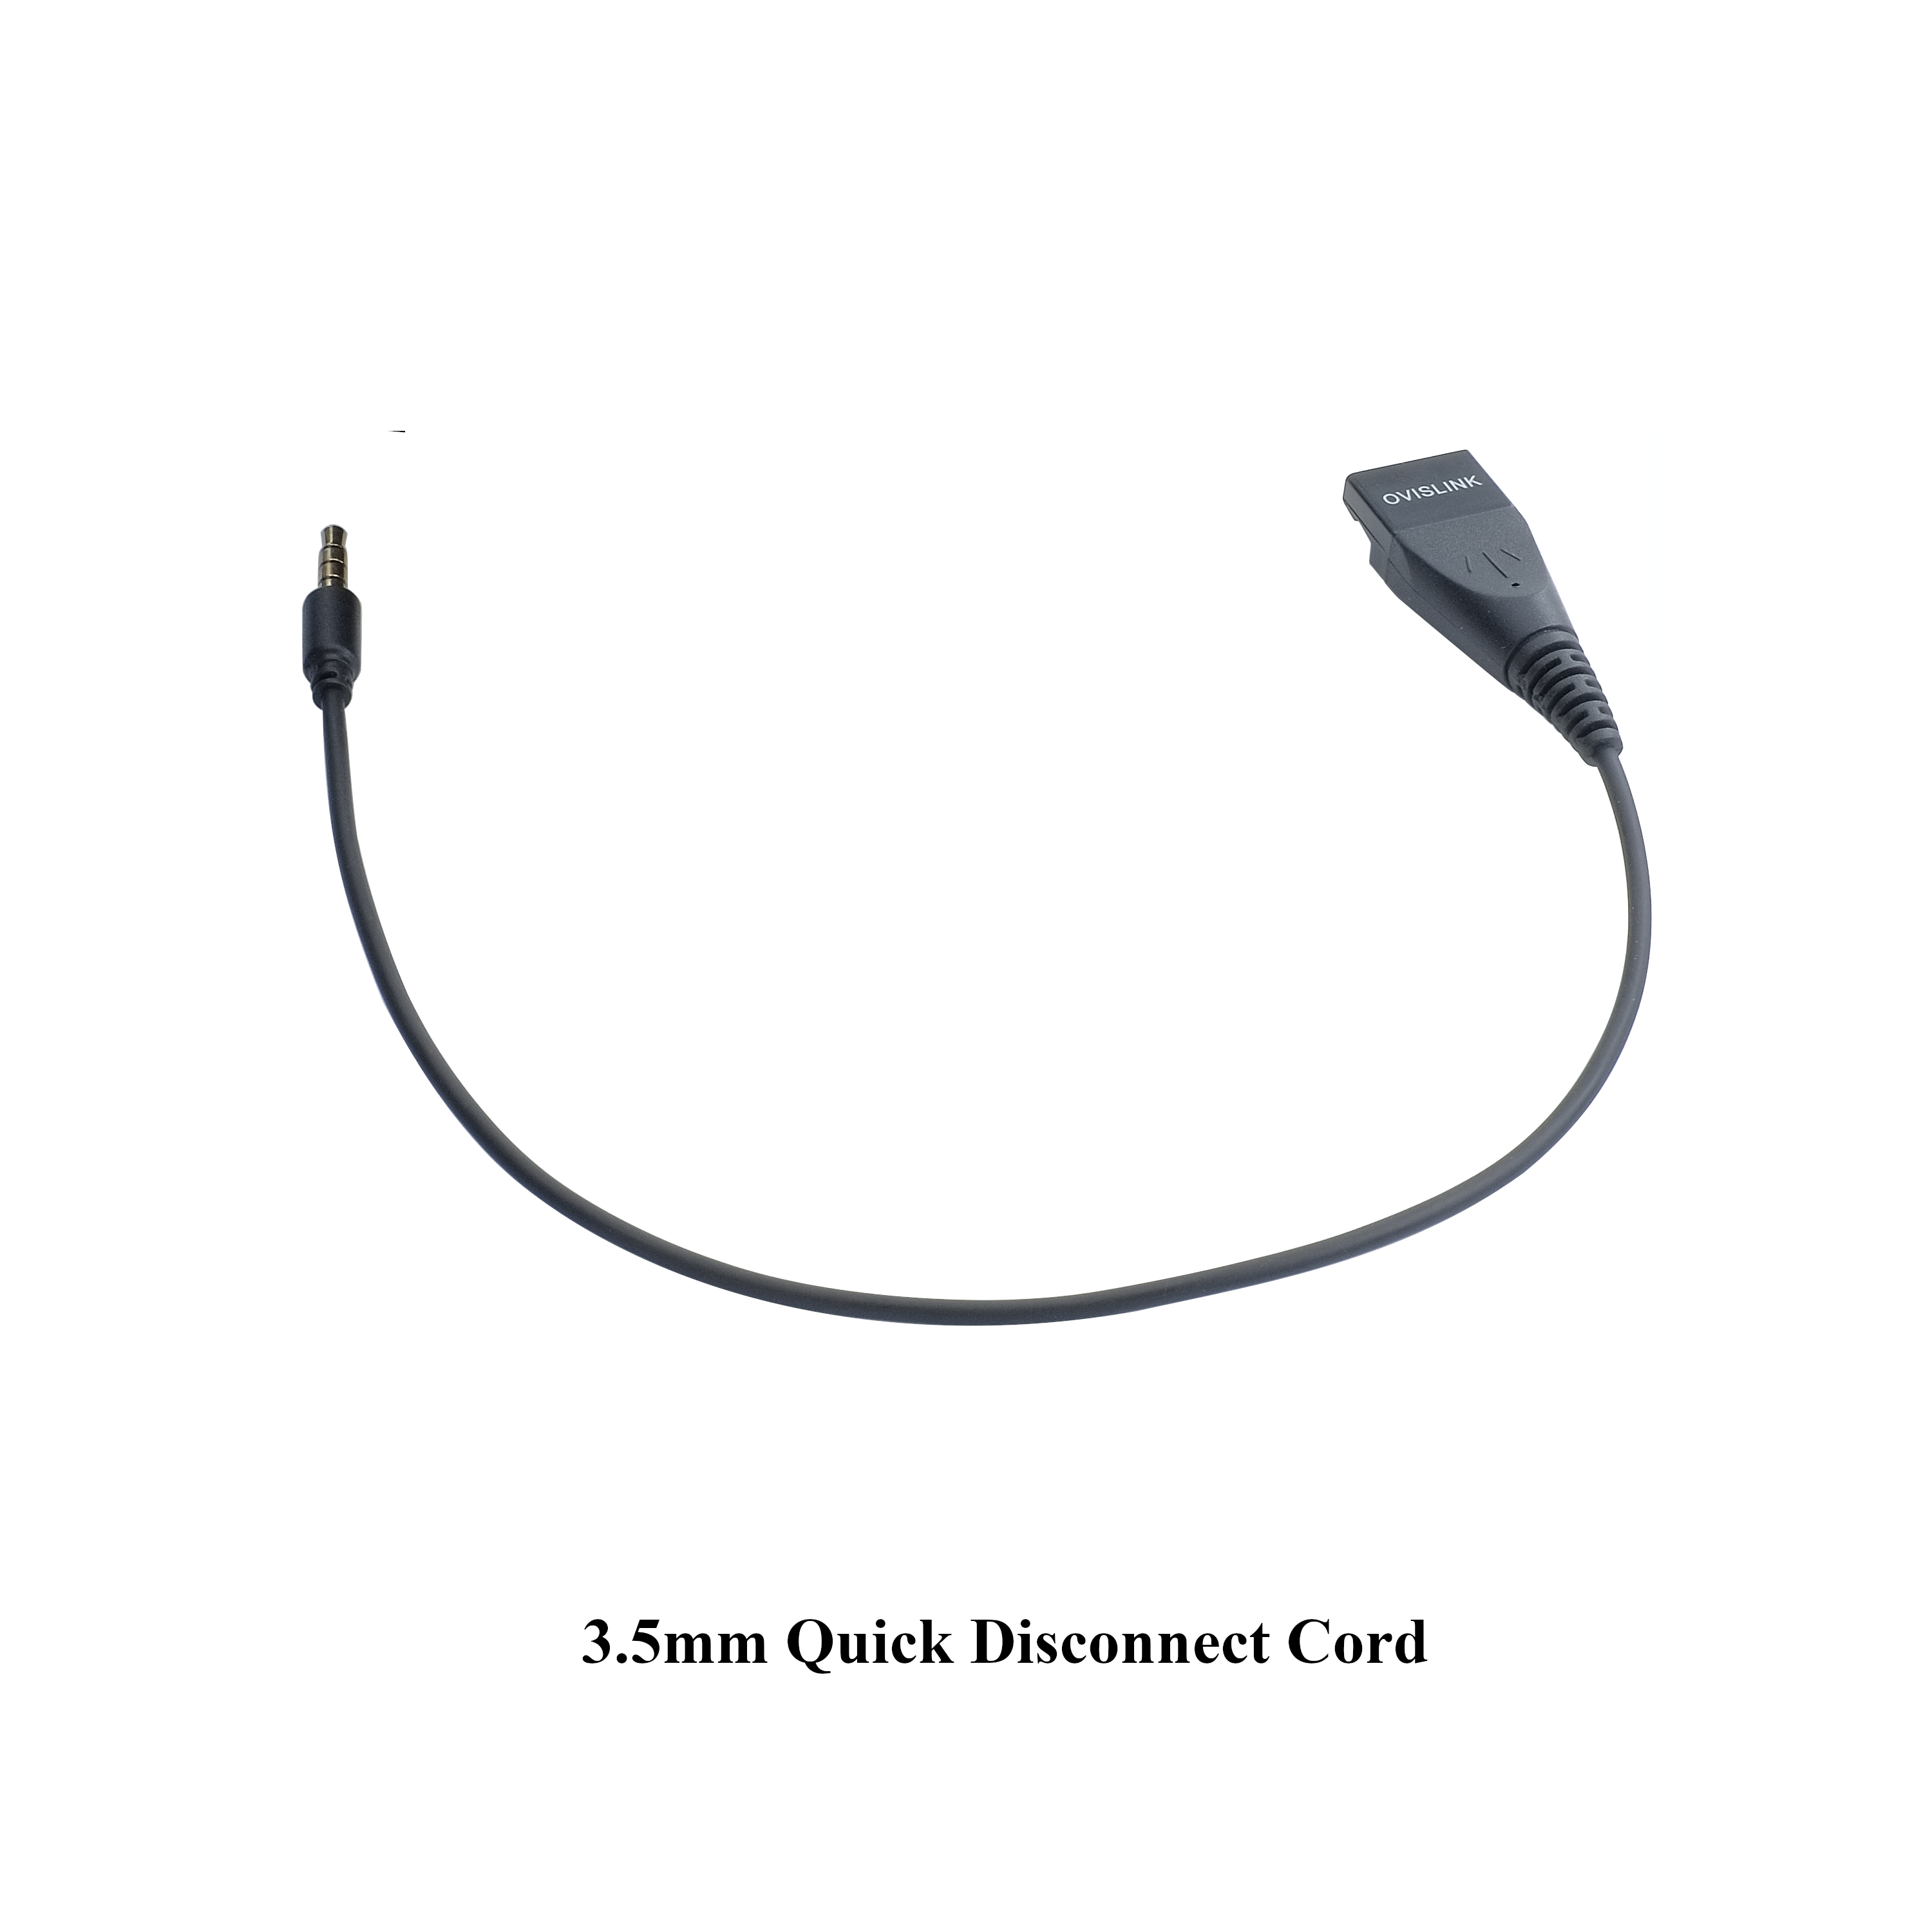 OvisLink Headset short 3.5mm Quick Disconnet cord